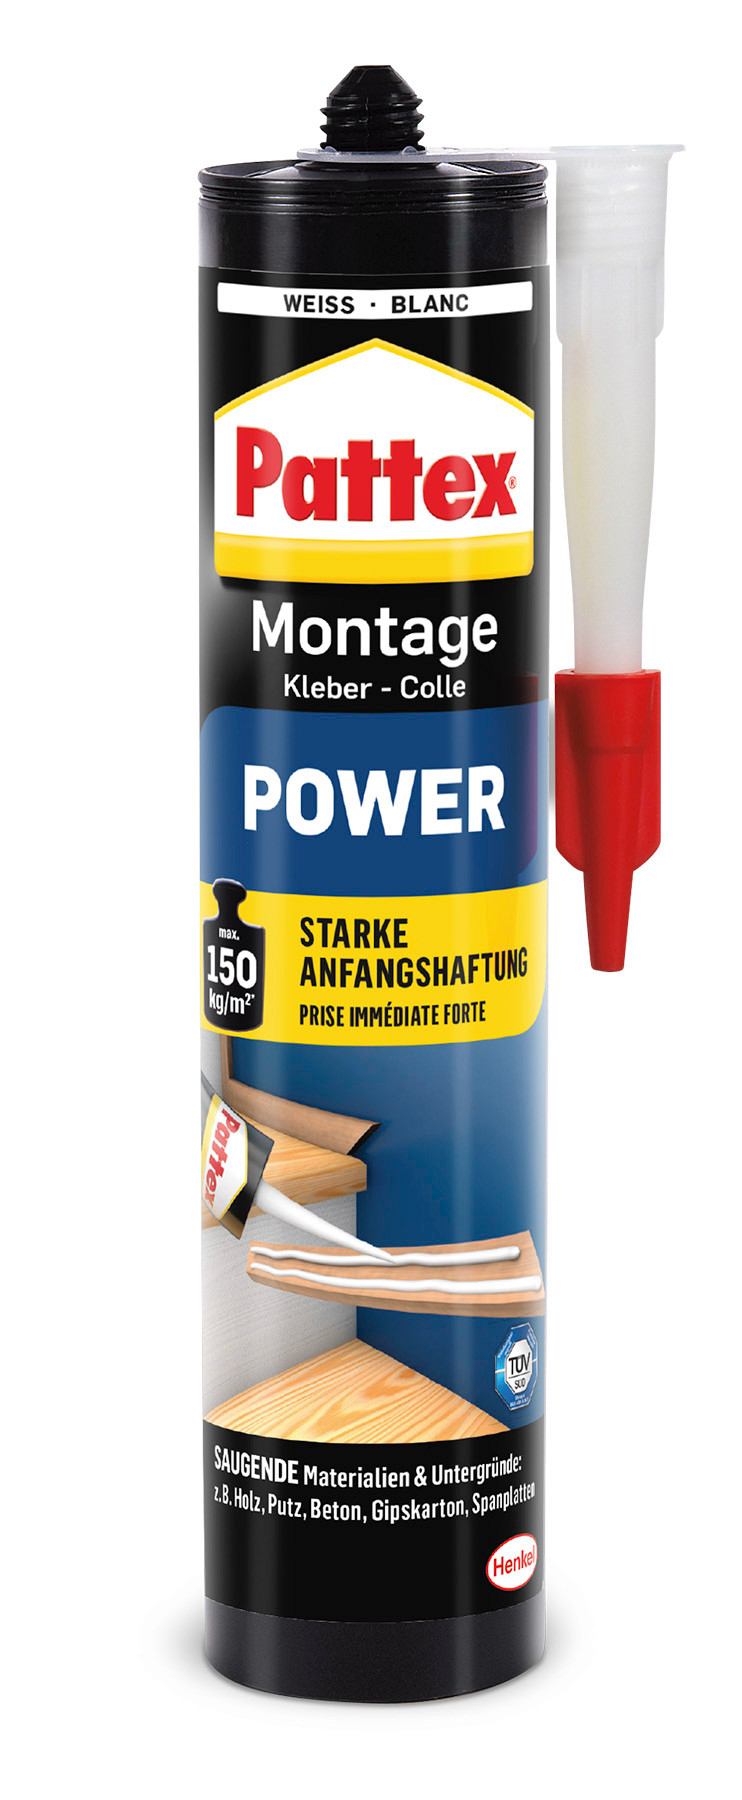 Pattex Montage Power